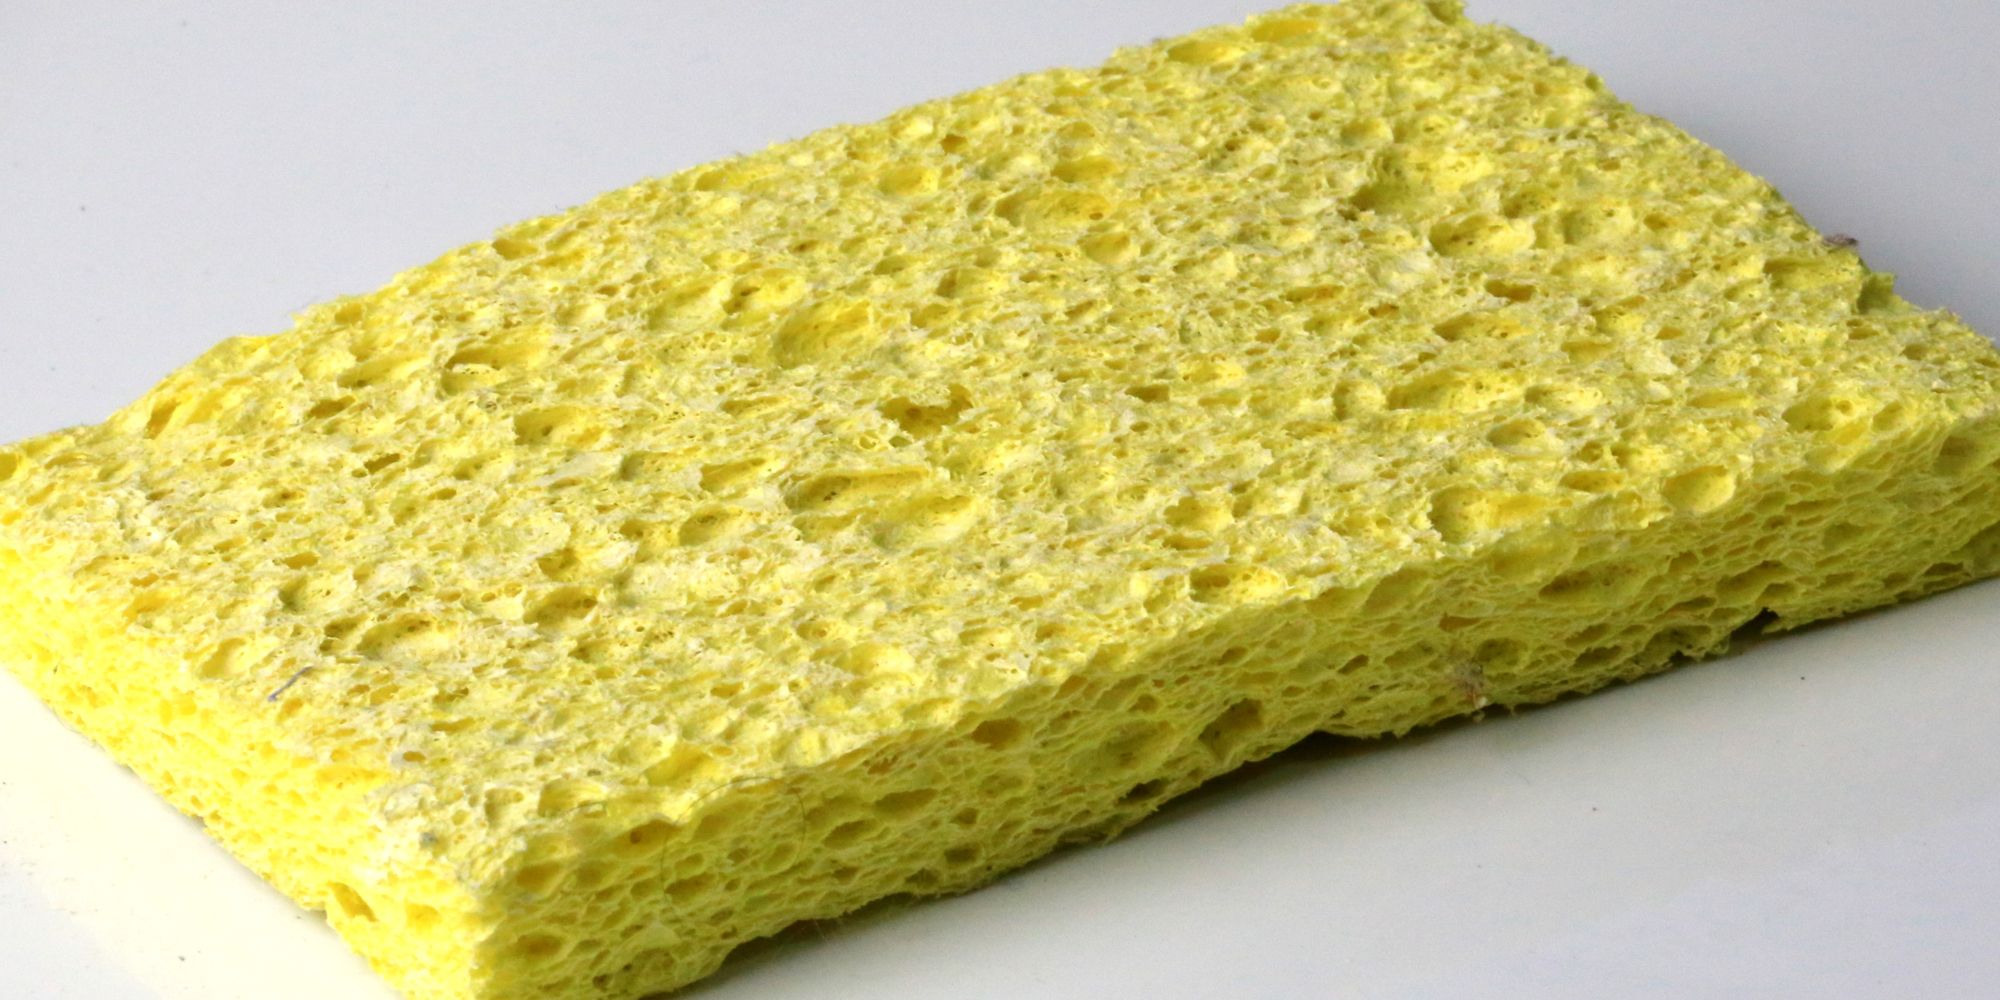 microwave sponge to kill germs